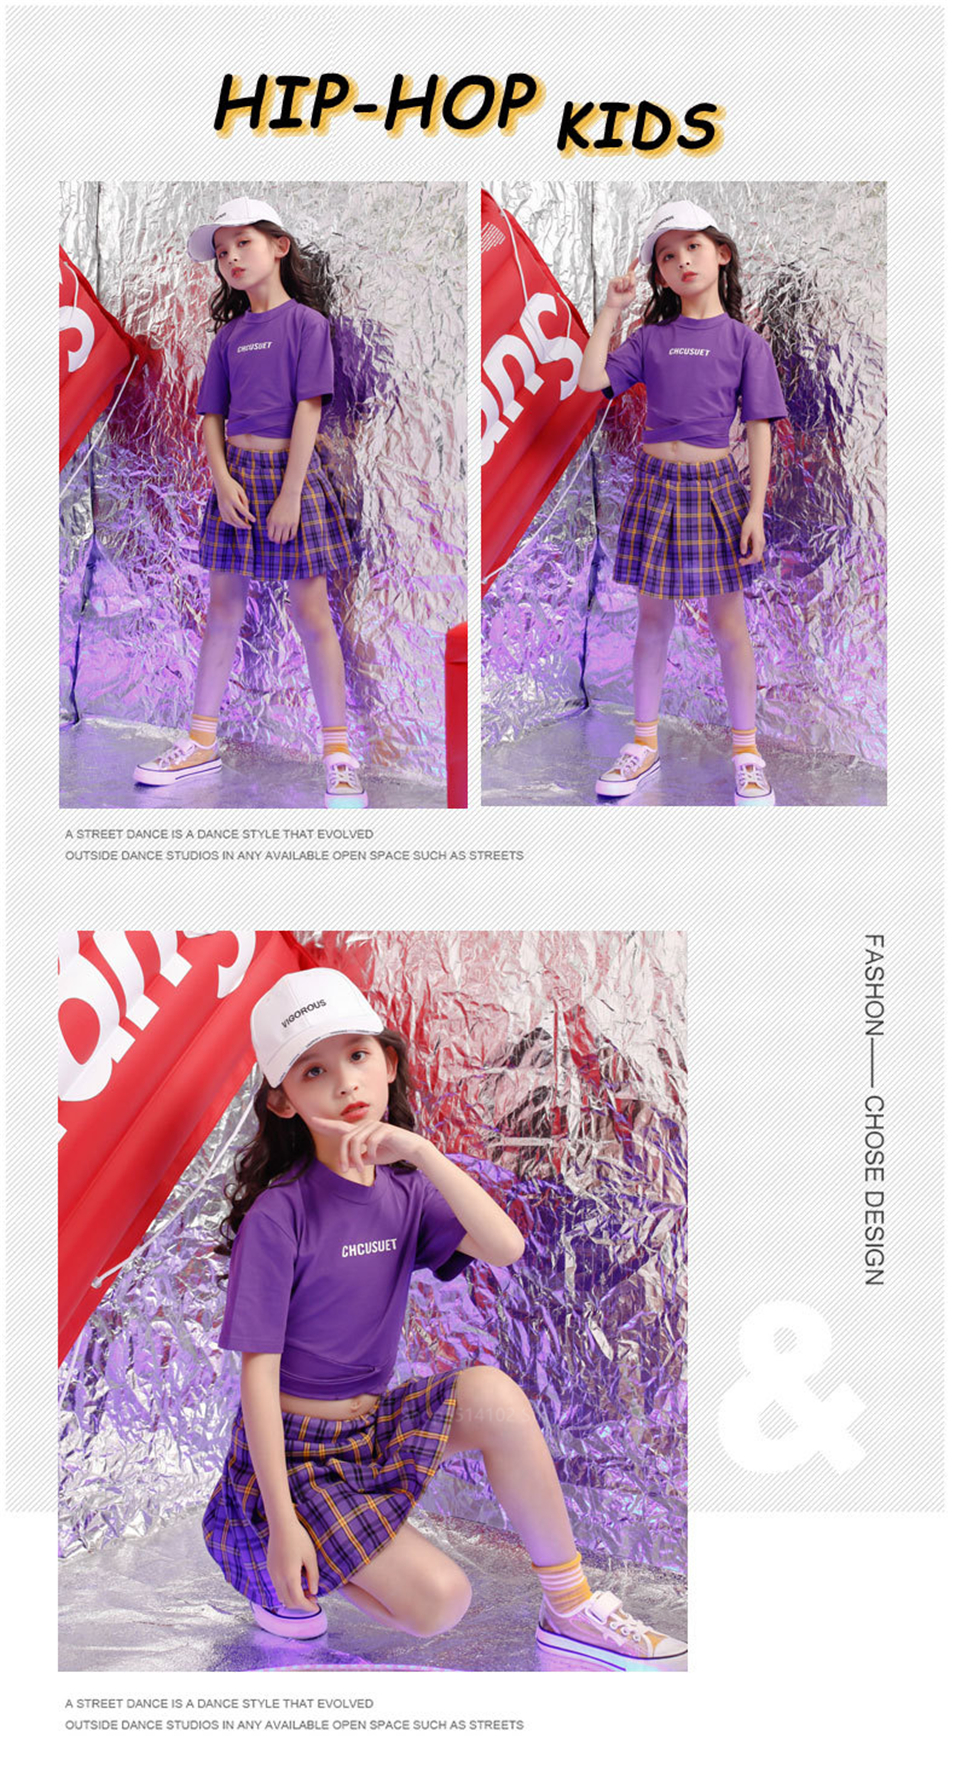 Kids Baby Girls School Korean Uniform Cheerleader School Team Hip Hop Competition Performance Cross Strap Top Plaid Skirt Set Image